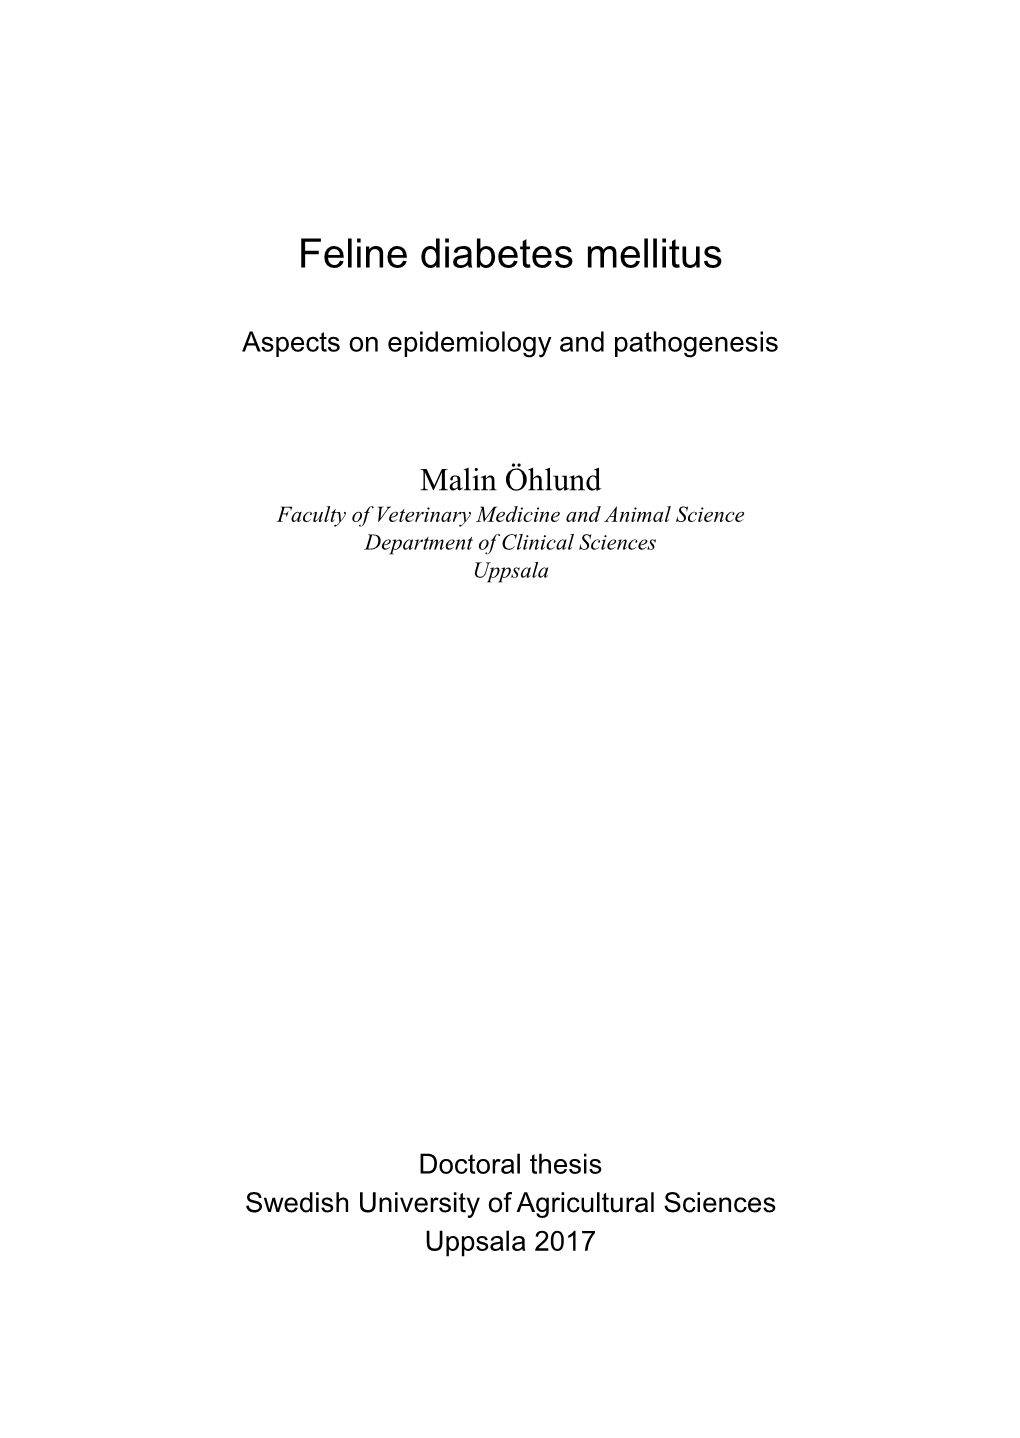 Feline Diabetes Mellitus